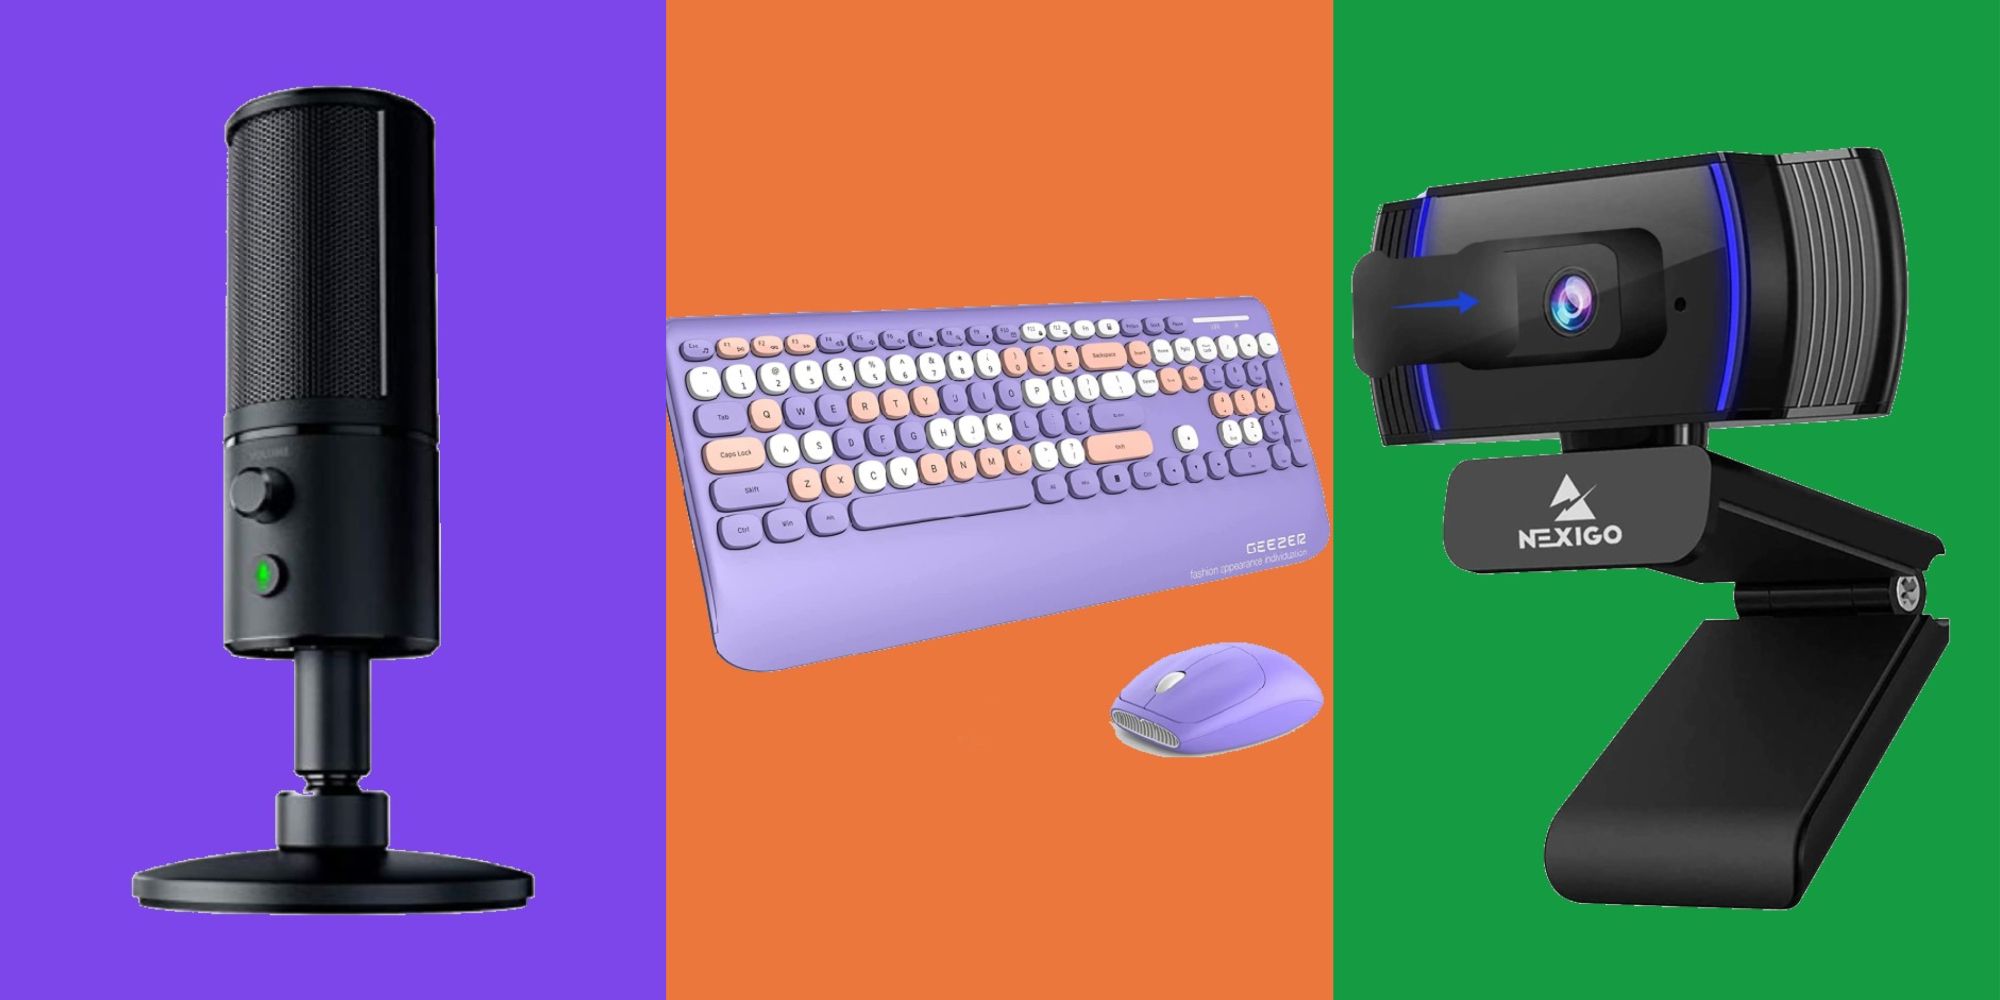 Split image of Razer mic, Geezer keyboard and mouse set, and Nexigo webcam, all from Amazon